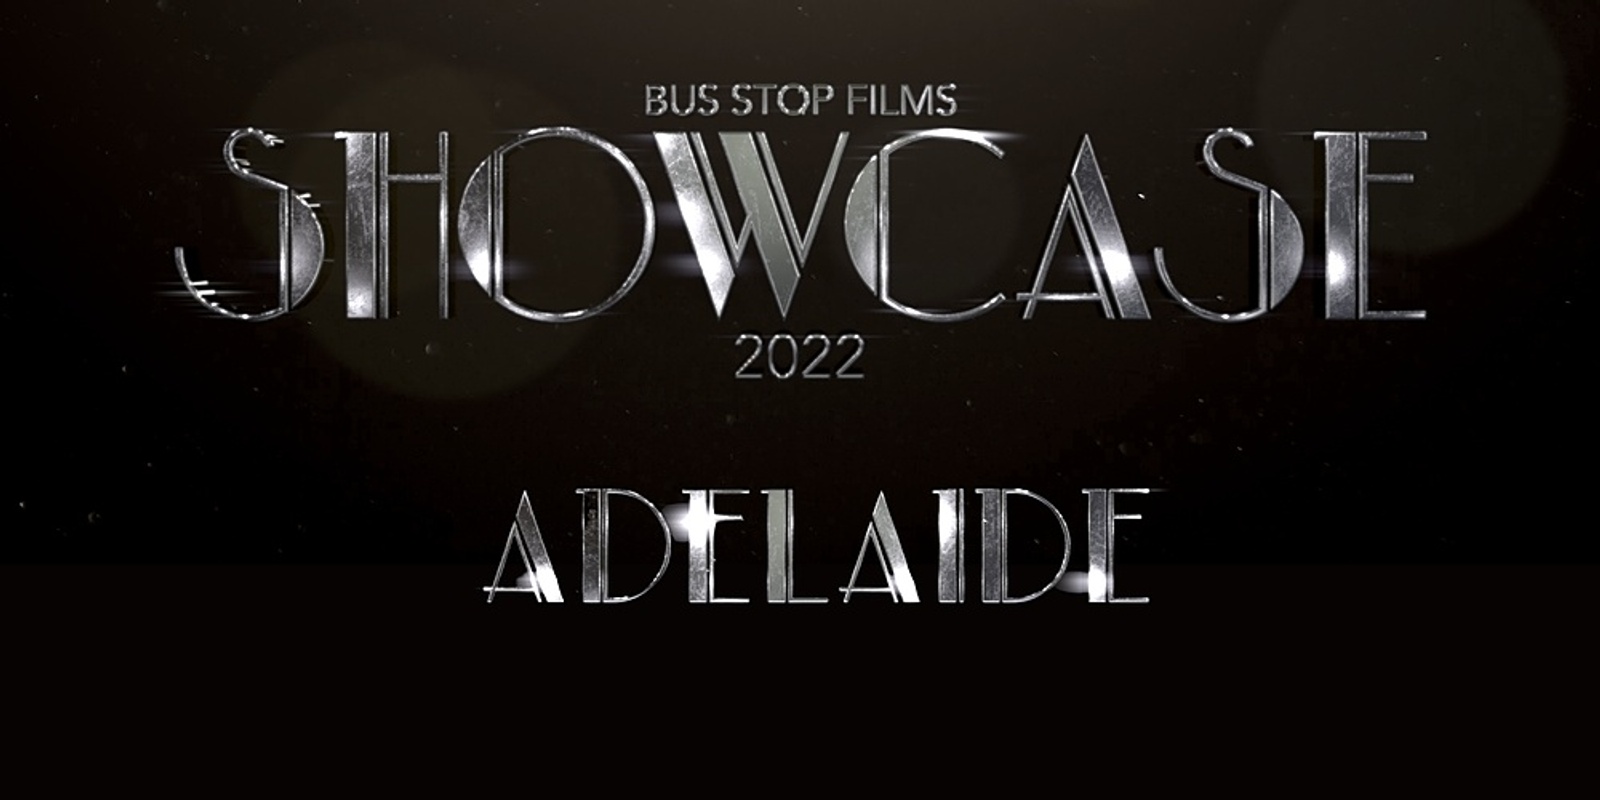 Banner image for Bus Stop Films Adelaide Showcase 2022